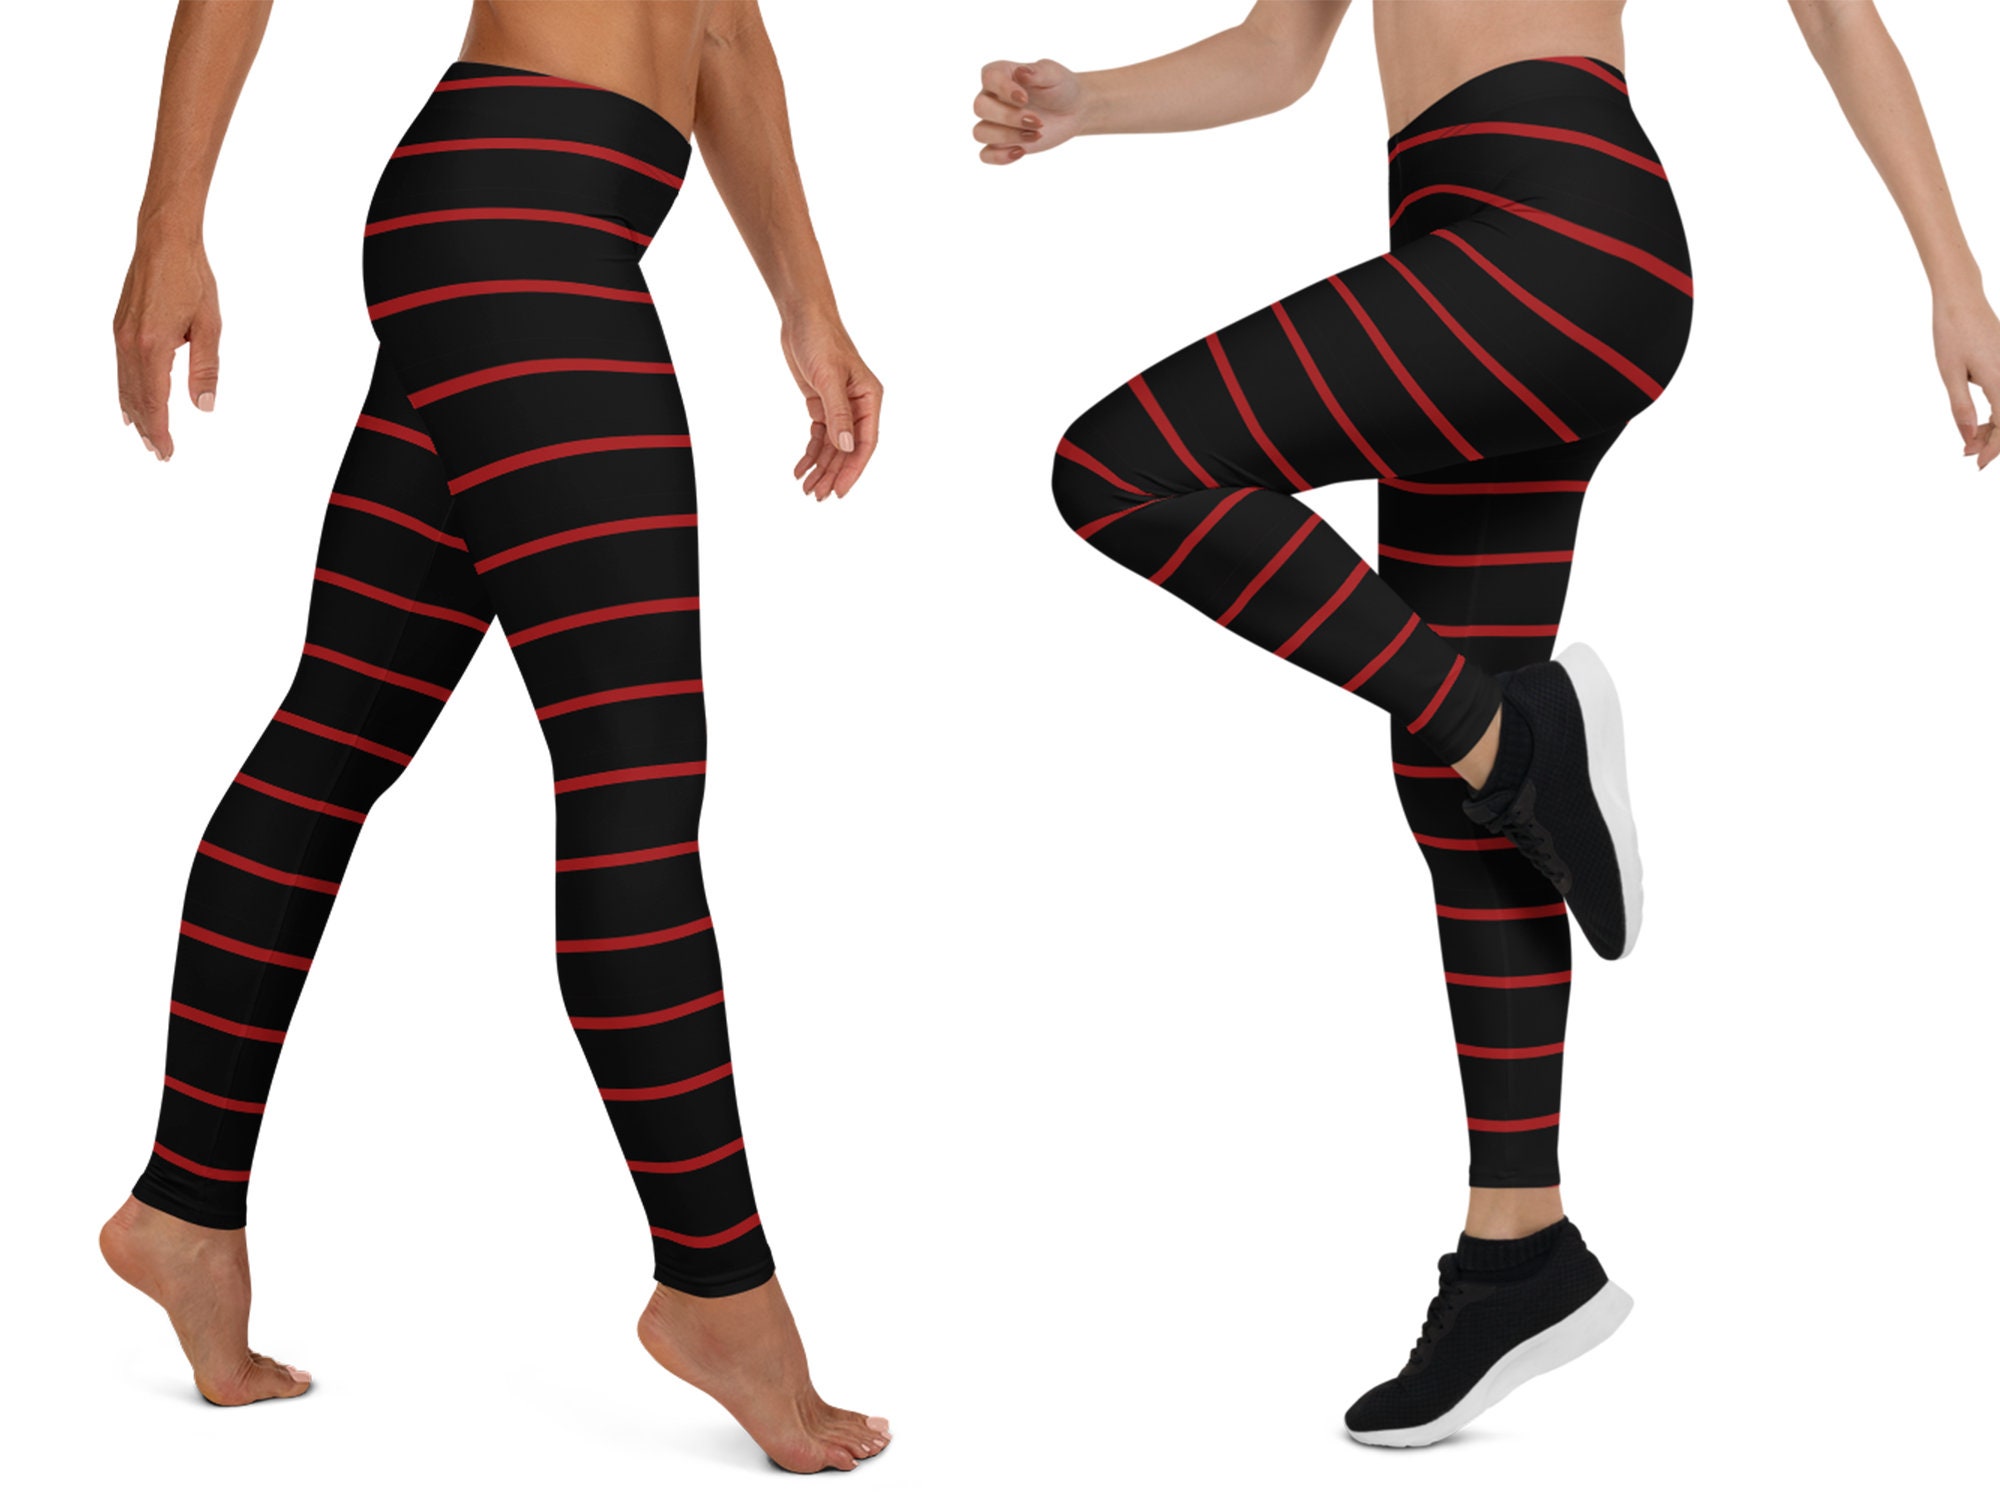 Vampire Striped Leggings Women Cosplay Black Red Workout Halloween Costume  Pants Running Yoga Activewear 